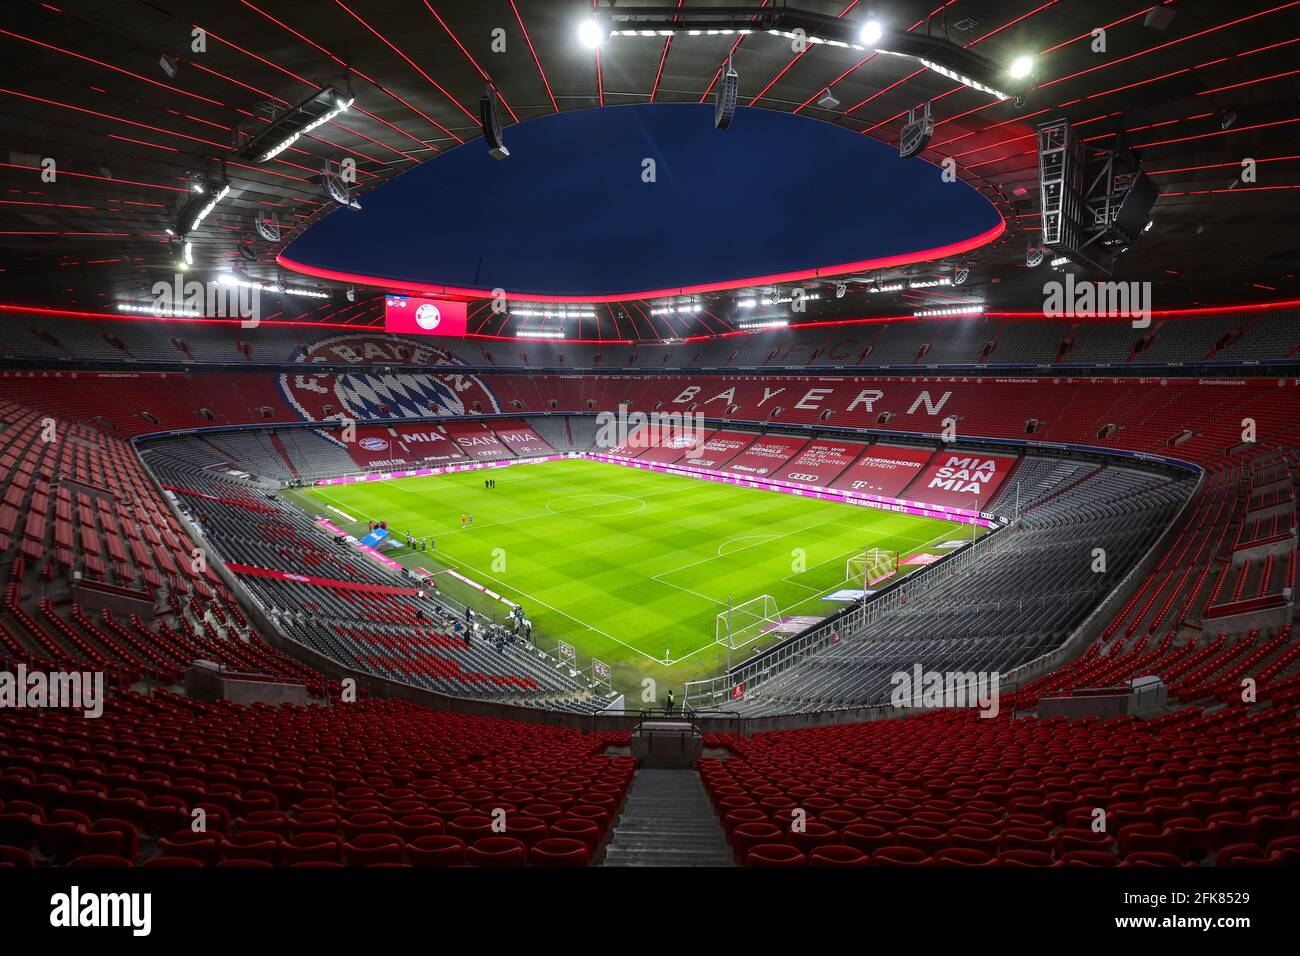 Stadion Allianz Arena in Muenchen Froettmaning for the UEFA Euro 2020 / 2021  football European Championship Football Stadium from FC Bayern Munich ©  diebilderwelt / Alamy Stock Stock Photo - Alamy